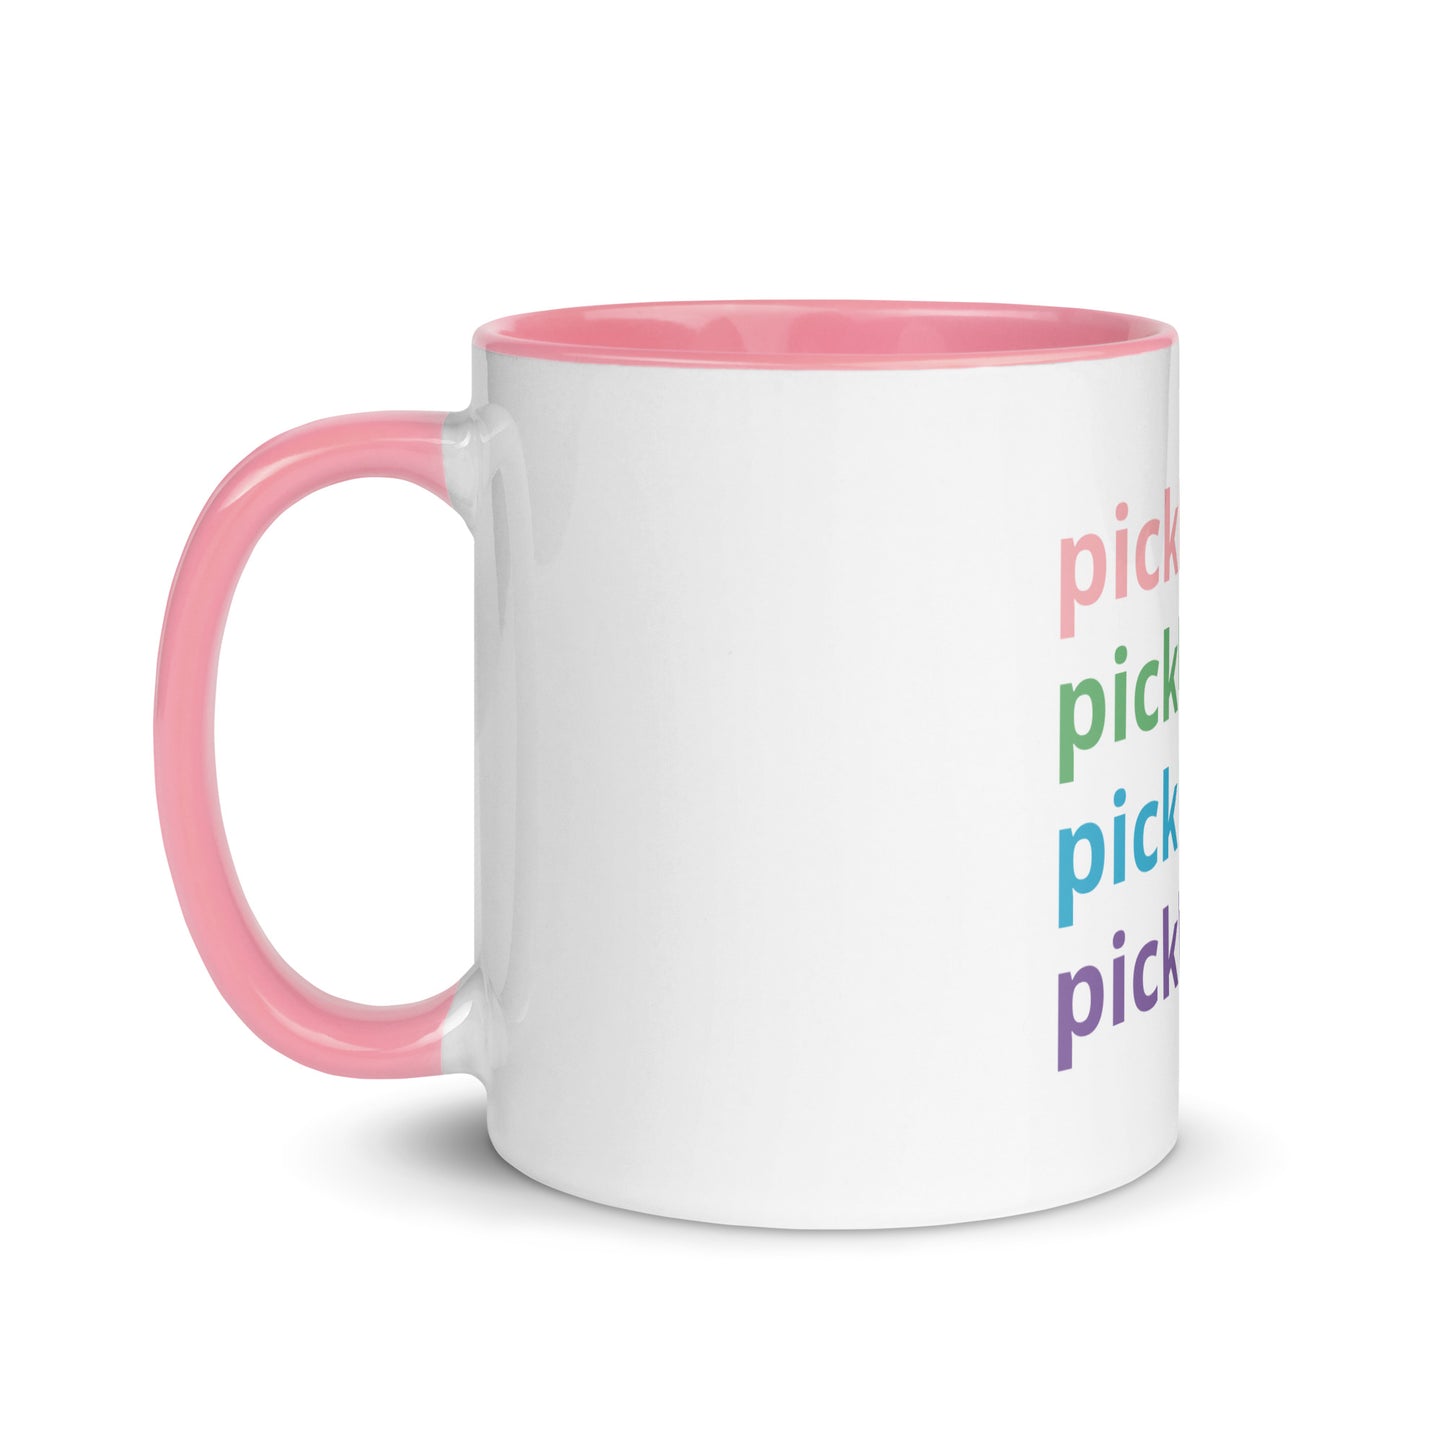 Pickleball - 11 oz Mug with Color Inside